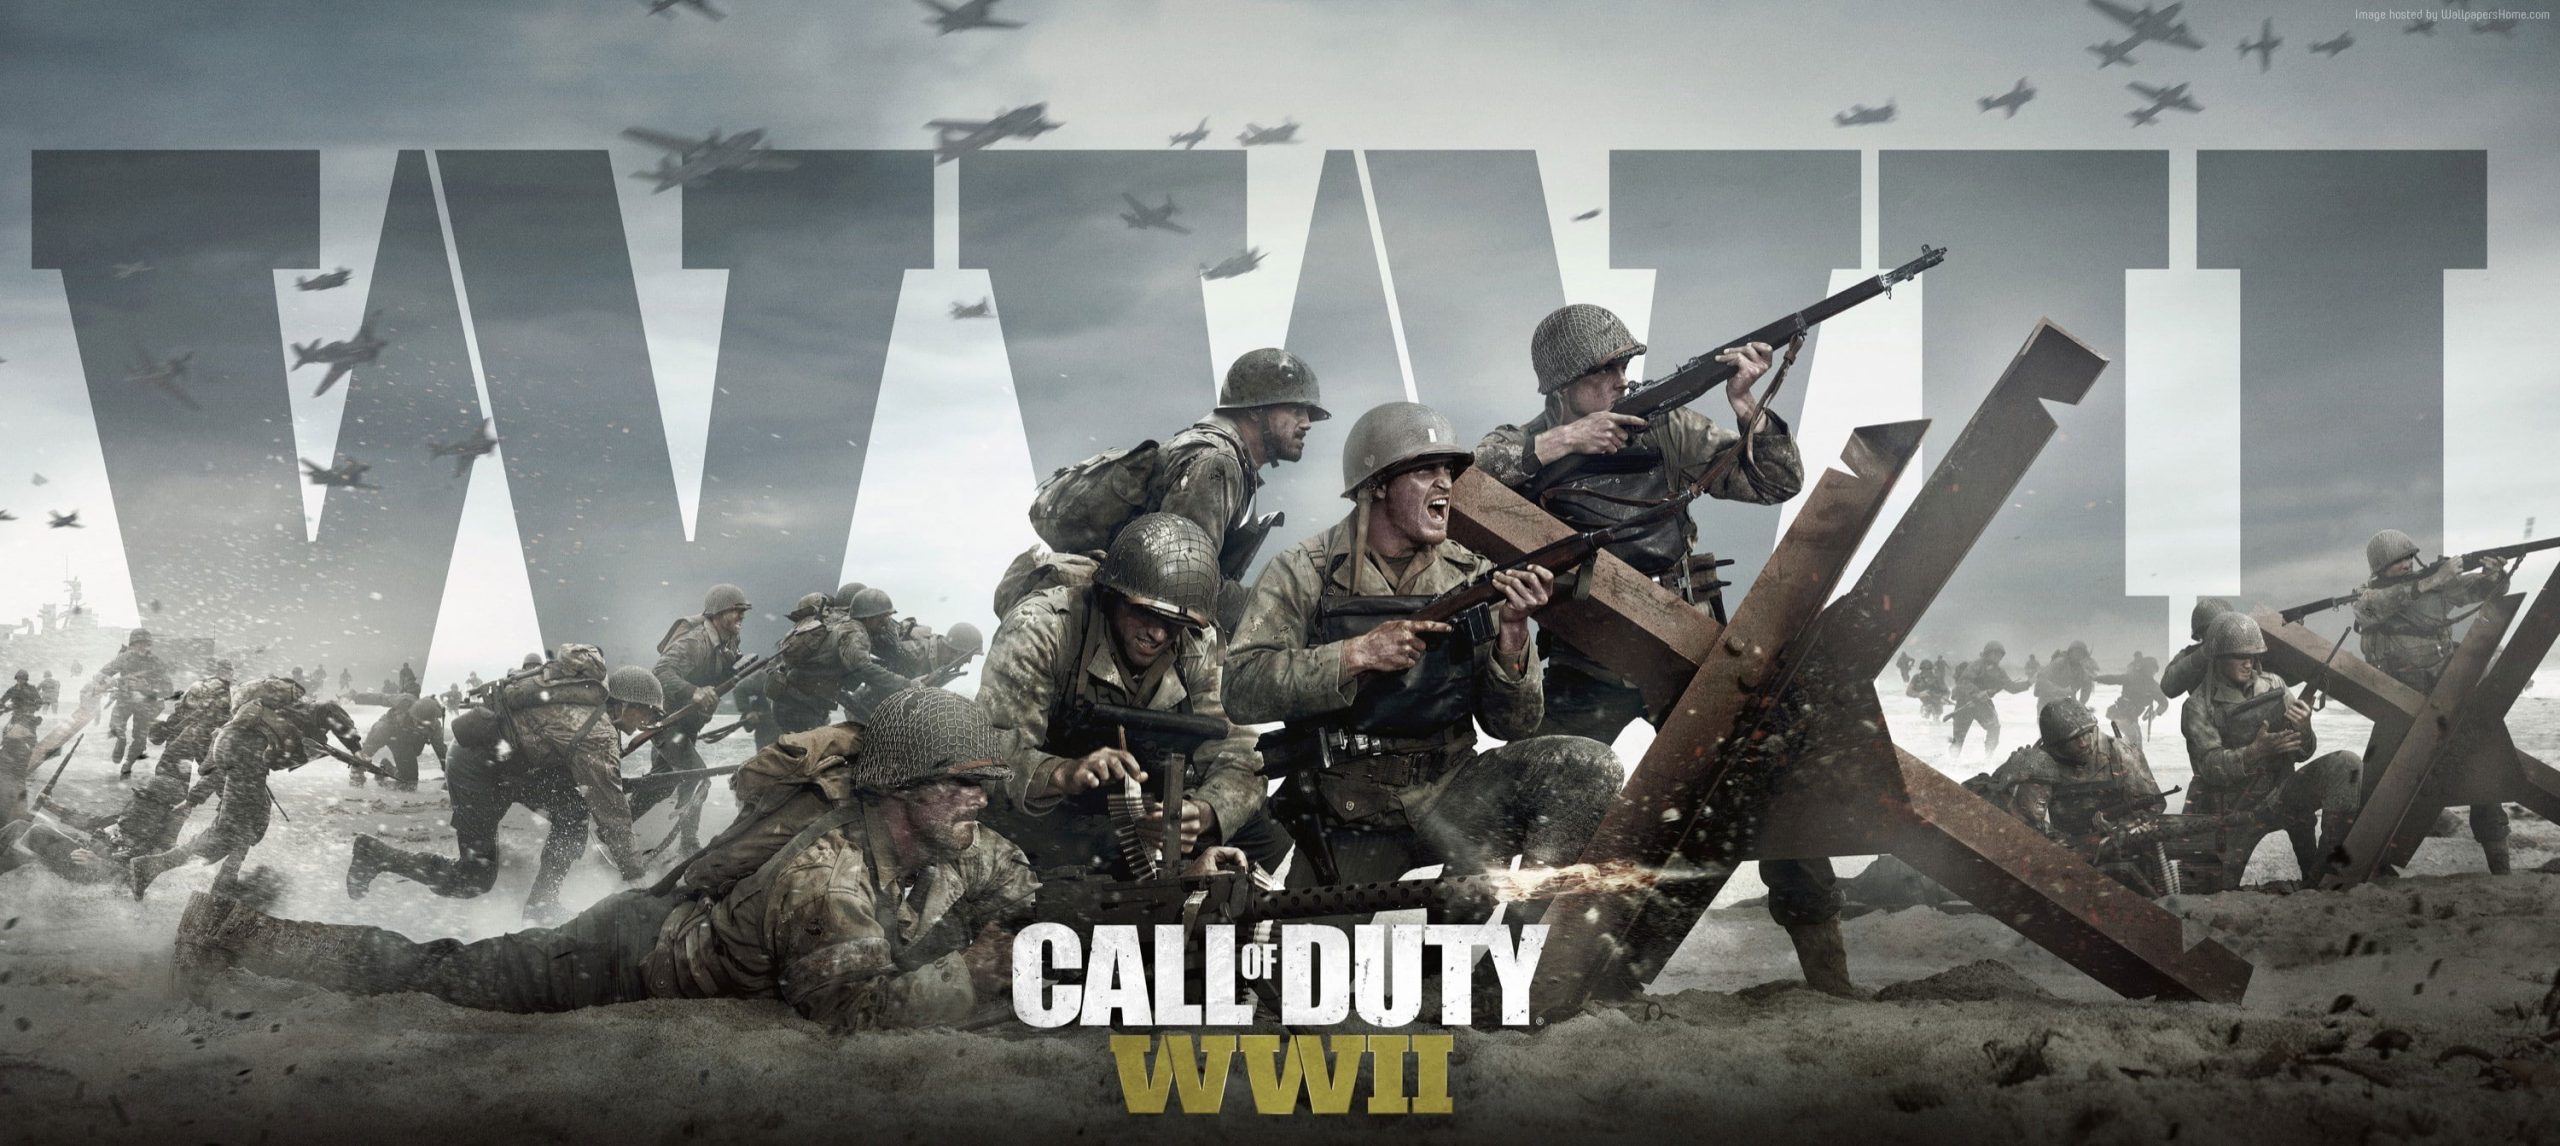 Wallpaper Poster, Call Of Duty Ww2, E3 2017